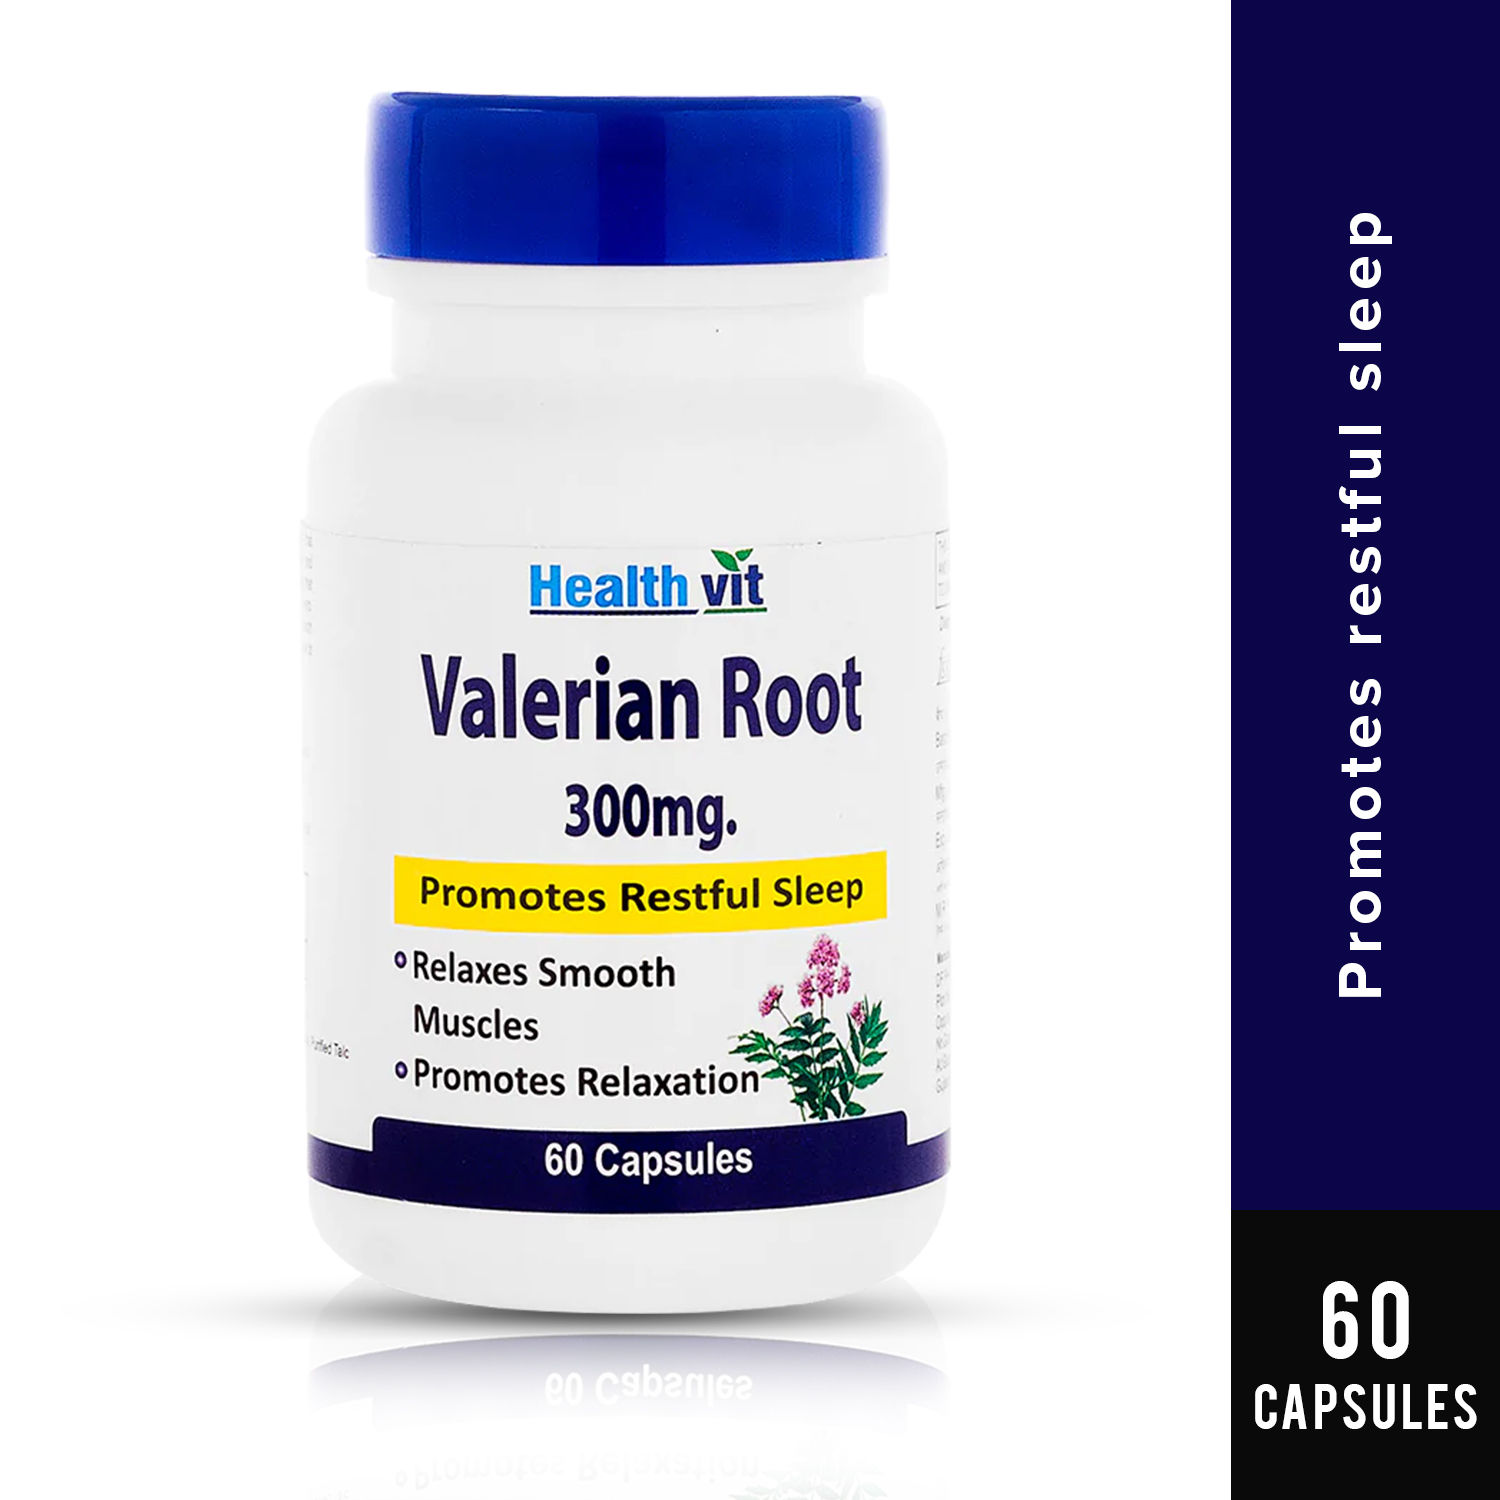 HealthVit Valerian Root Extract 300mg 60 Capsules